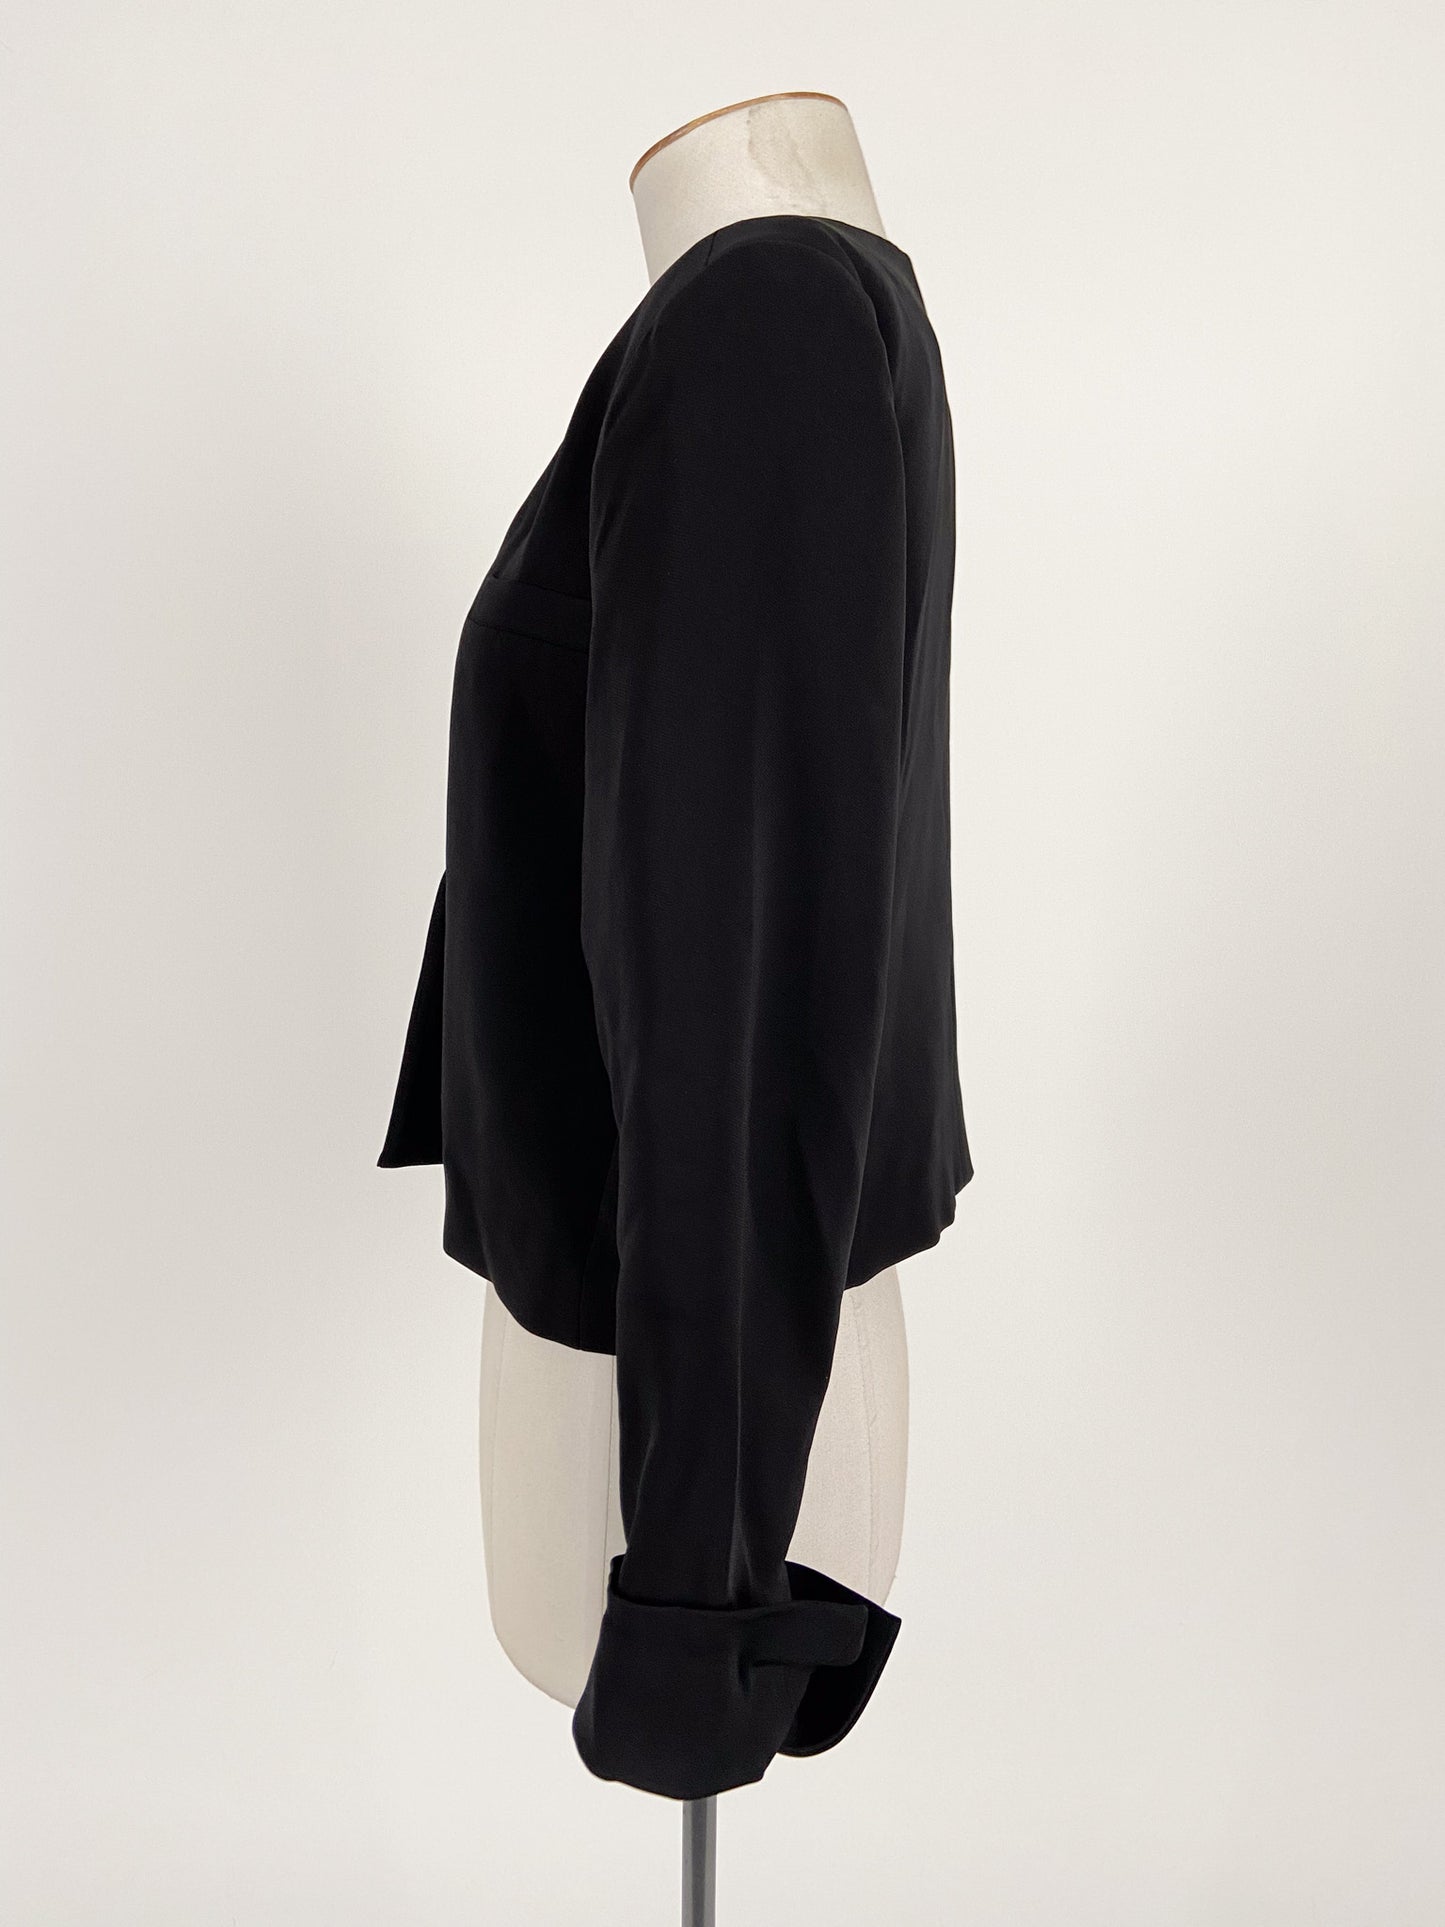 Max | Black Workwear Jacket | Size 8